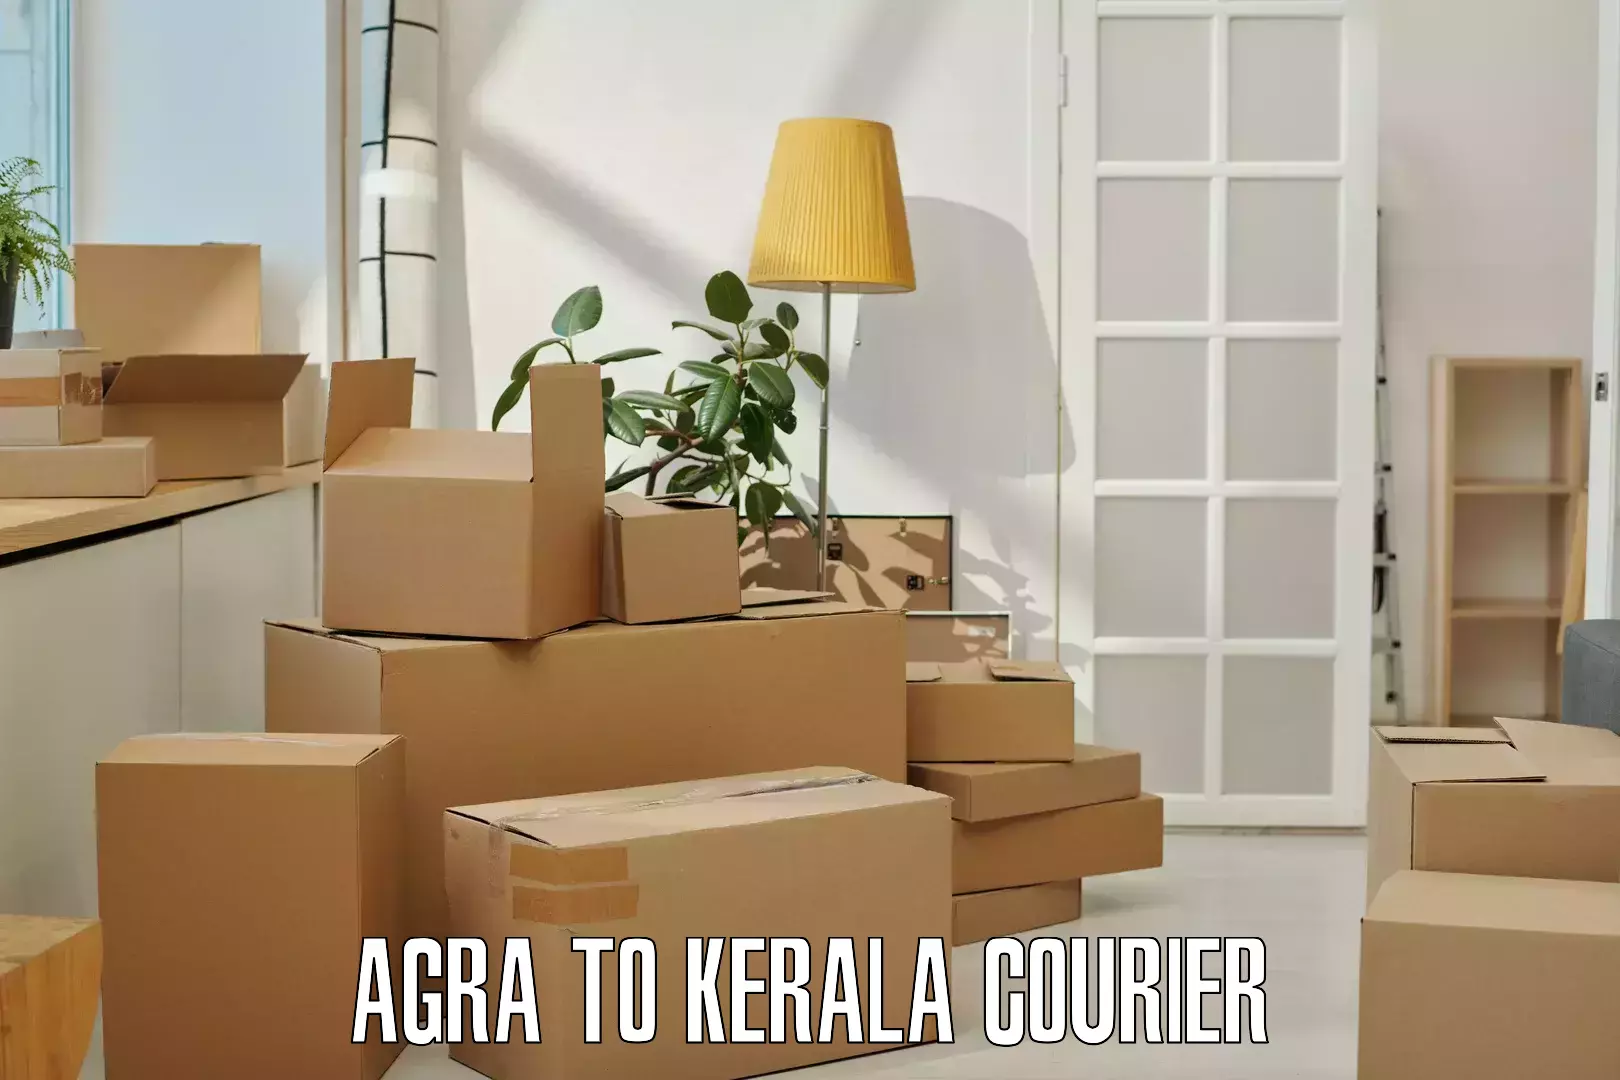 Enhanced tracking features Agra to Kerala